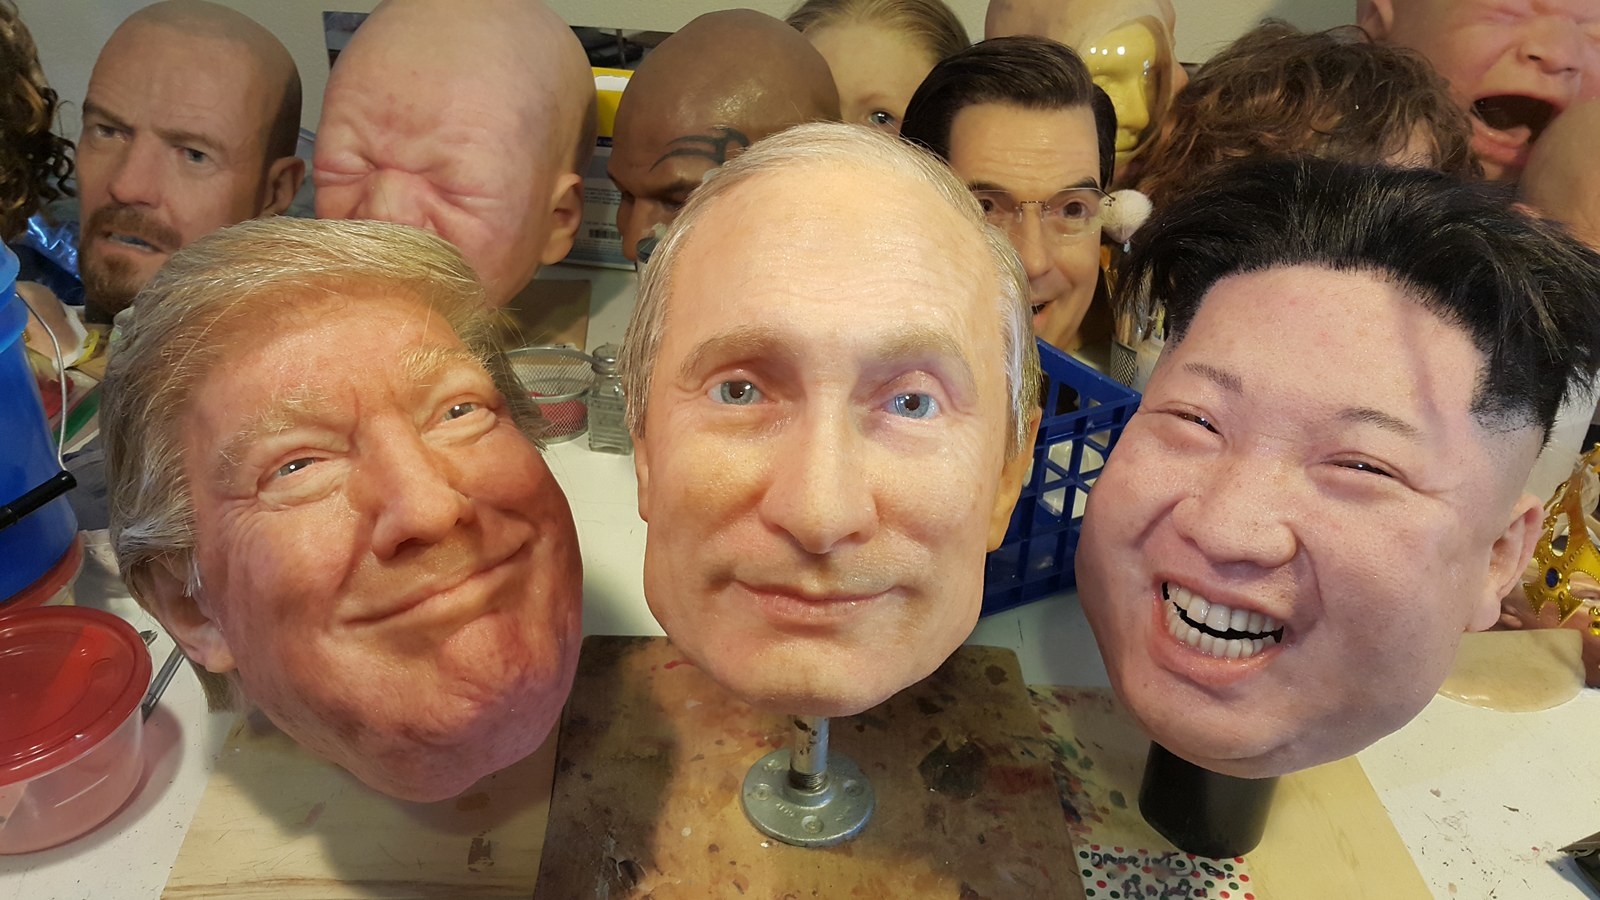 Bule respekt vogn These Masks Of Trump, Putin, And Kim Jong-Un Will Haunt Your Dreams